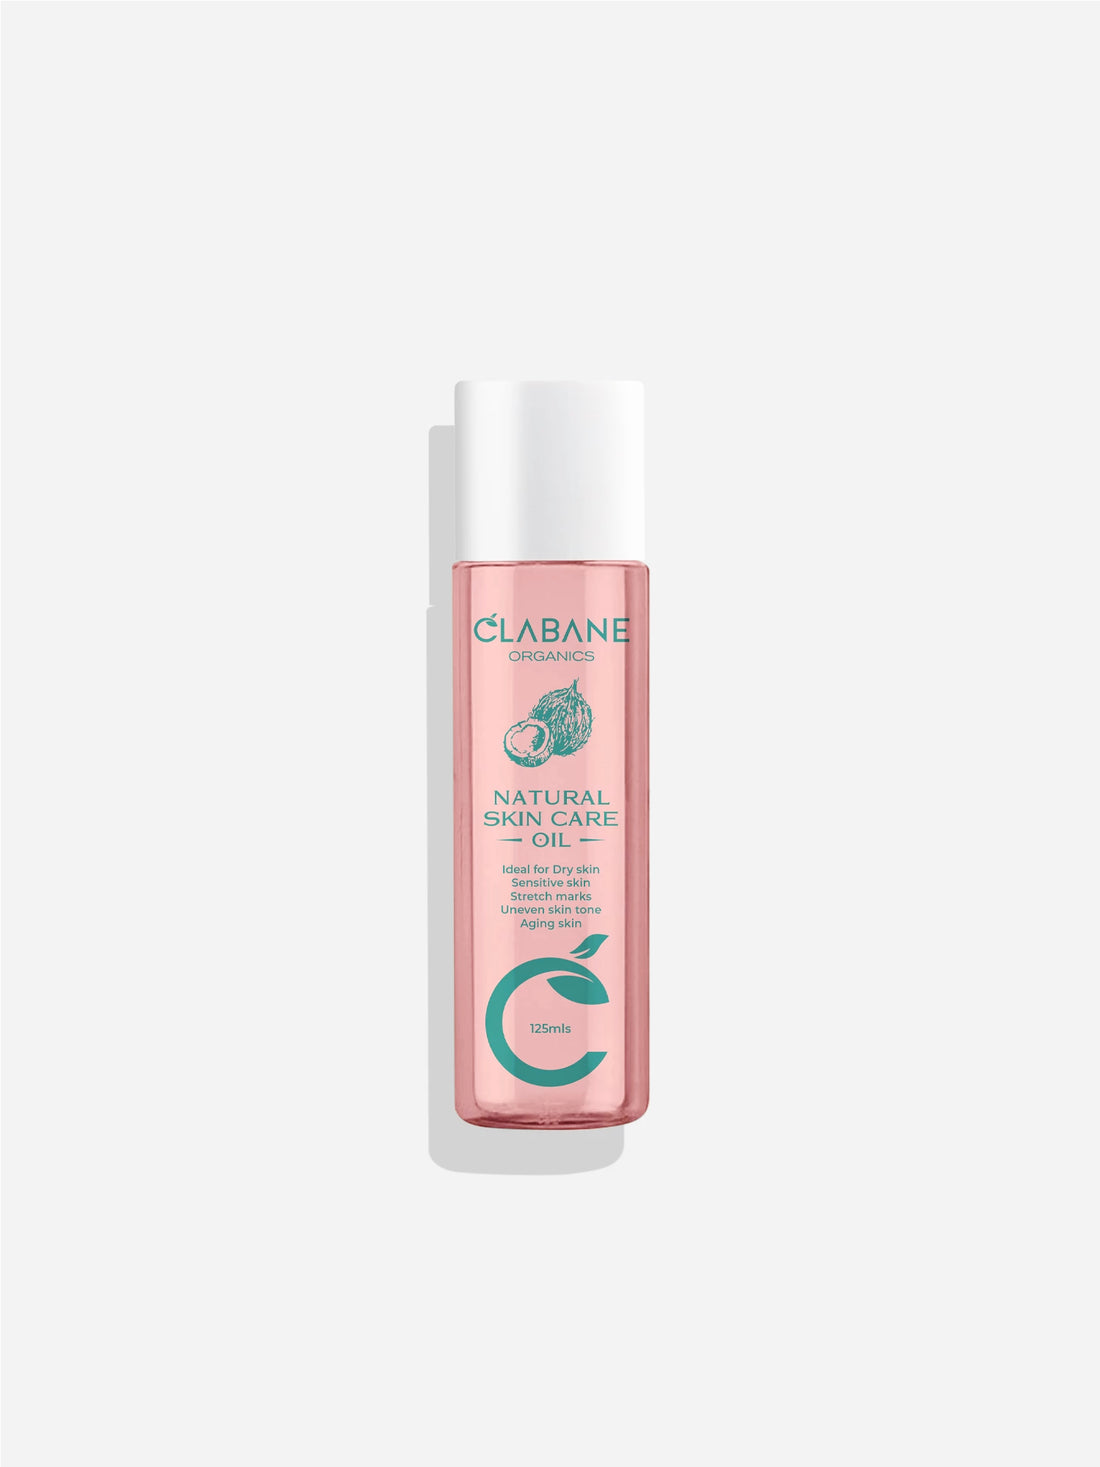 Clabane Organics Natural Skin Care Oil